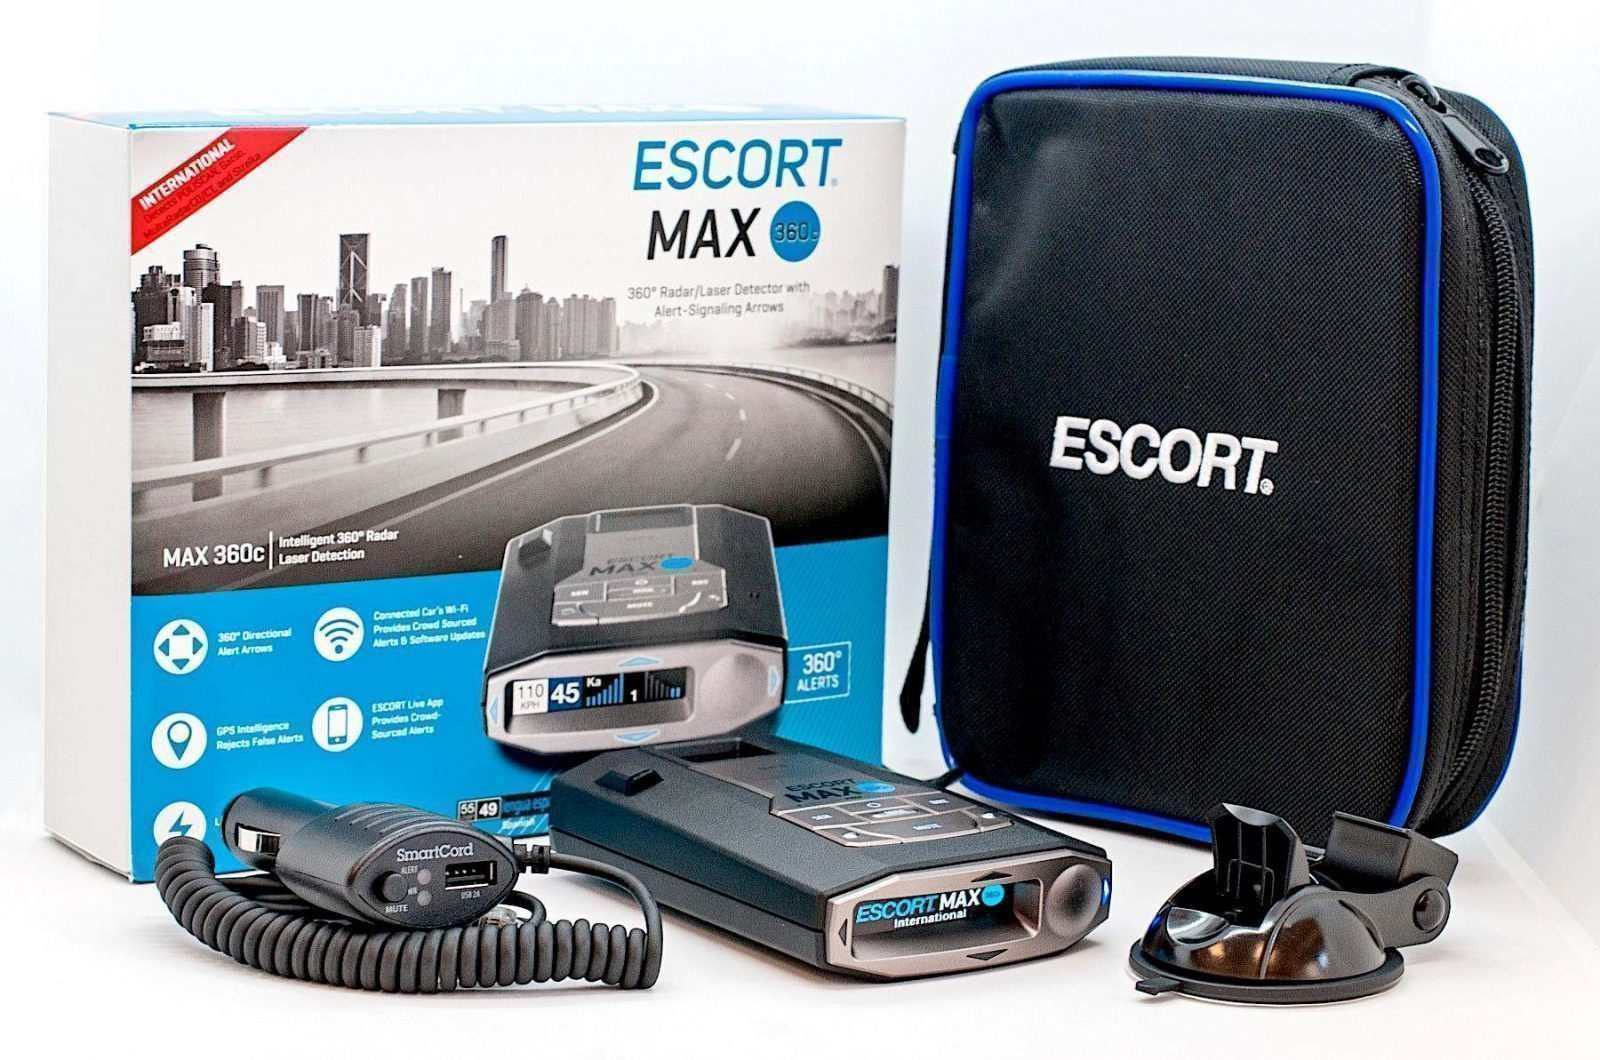 Escort Max 360c International Radar Shop